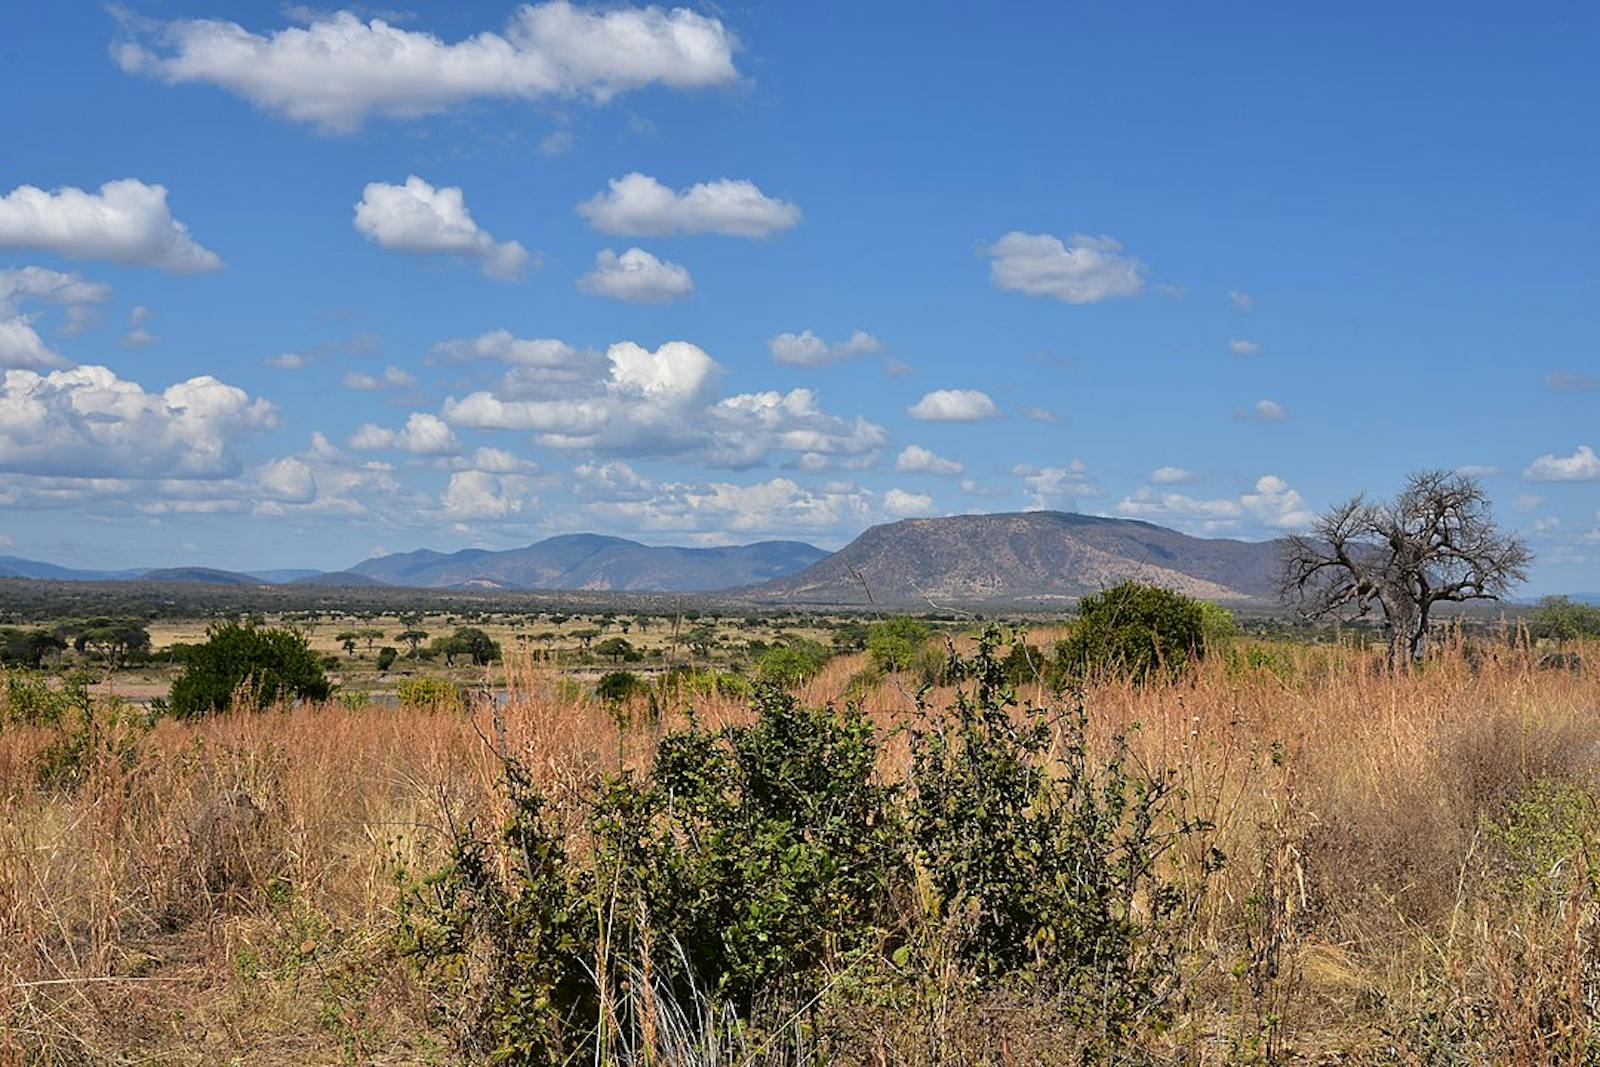 Southern Acacia-Commiphora Bushlands and Thickets